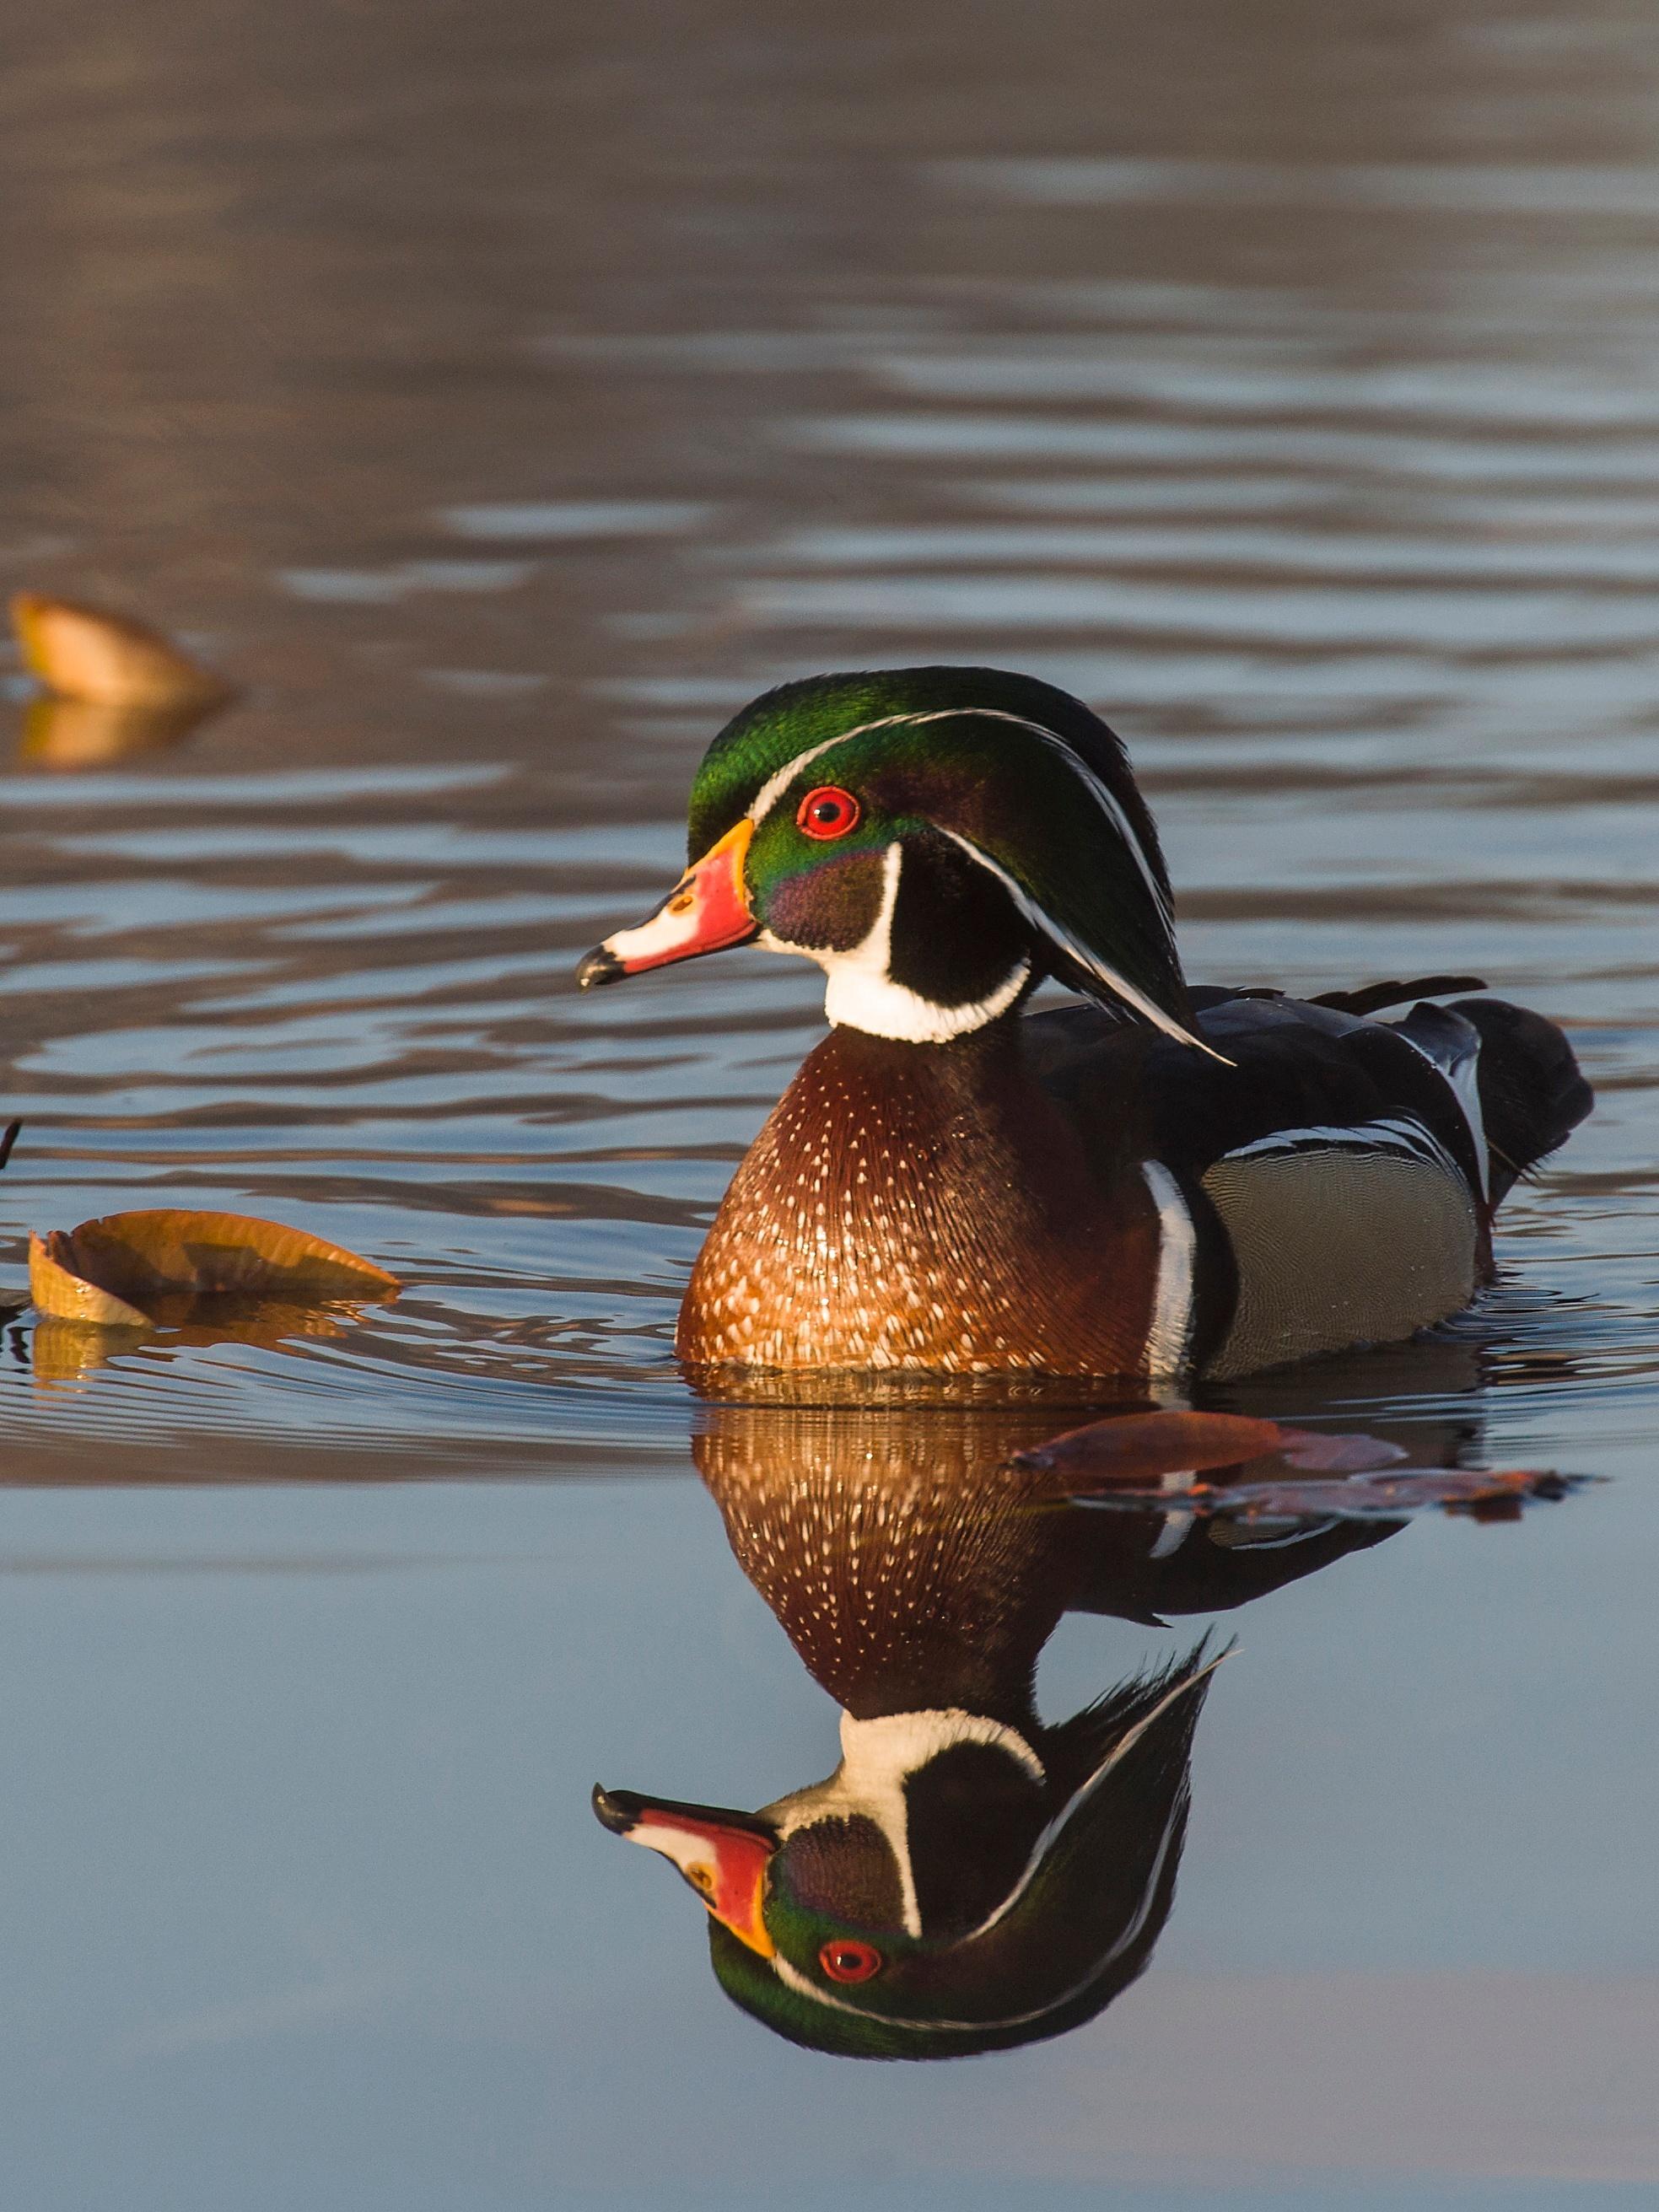 Wood duck-photo credit: Wildlife photographer Steve Oehlenschlager